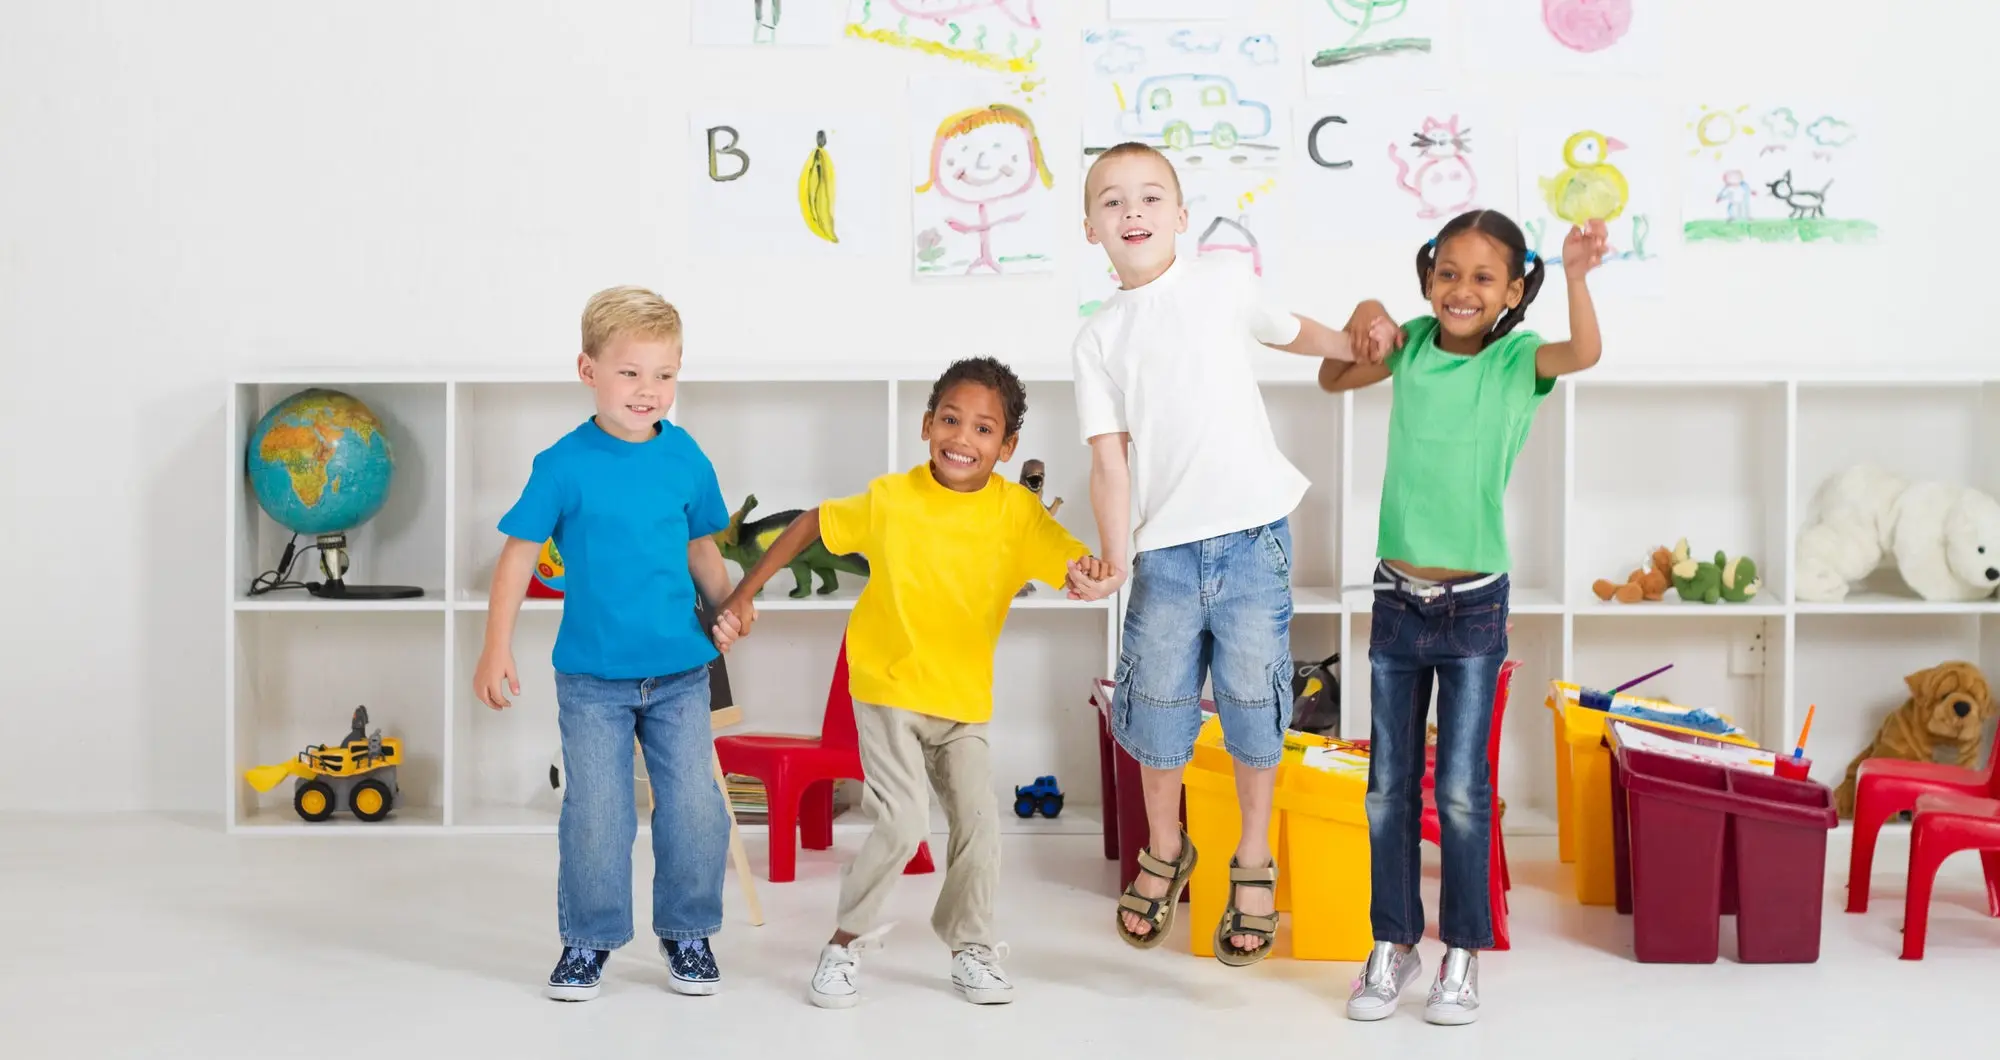 Preschool kids jumping in classroom.